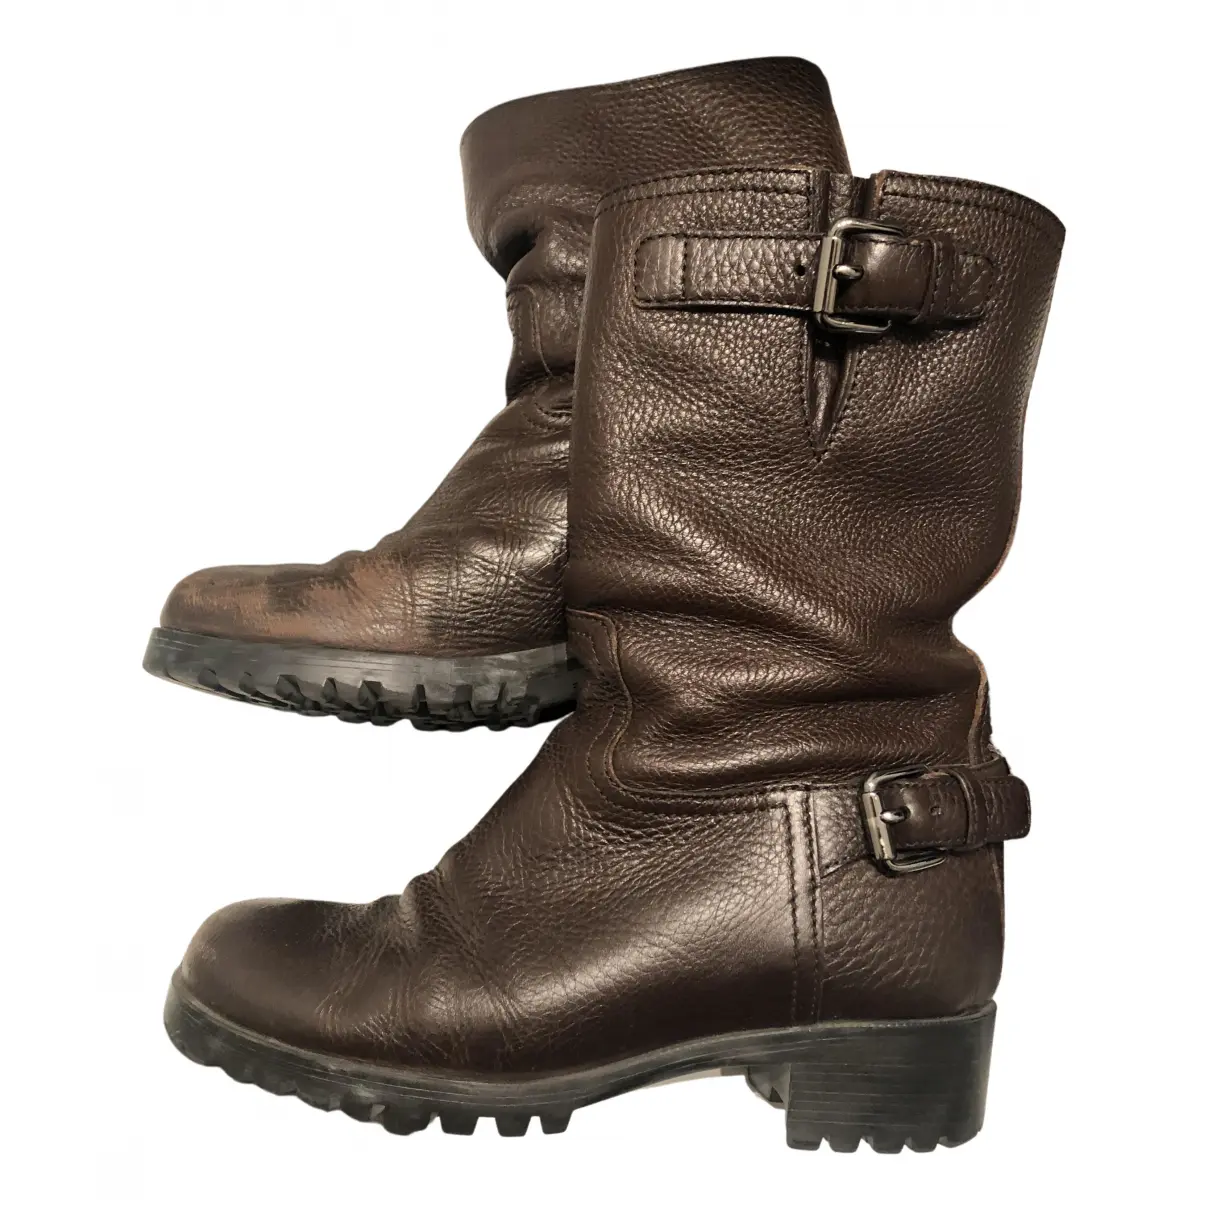 Leather biker boots Prada